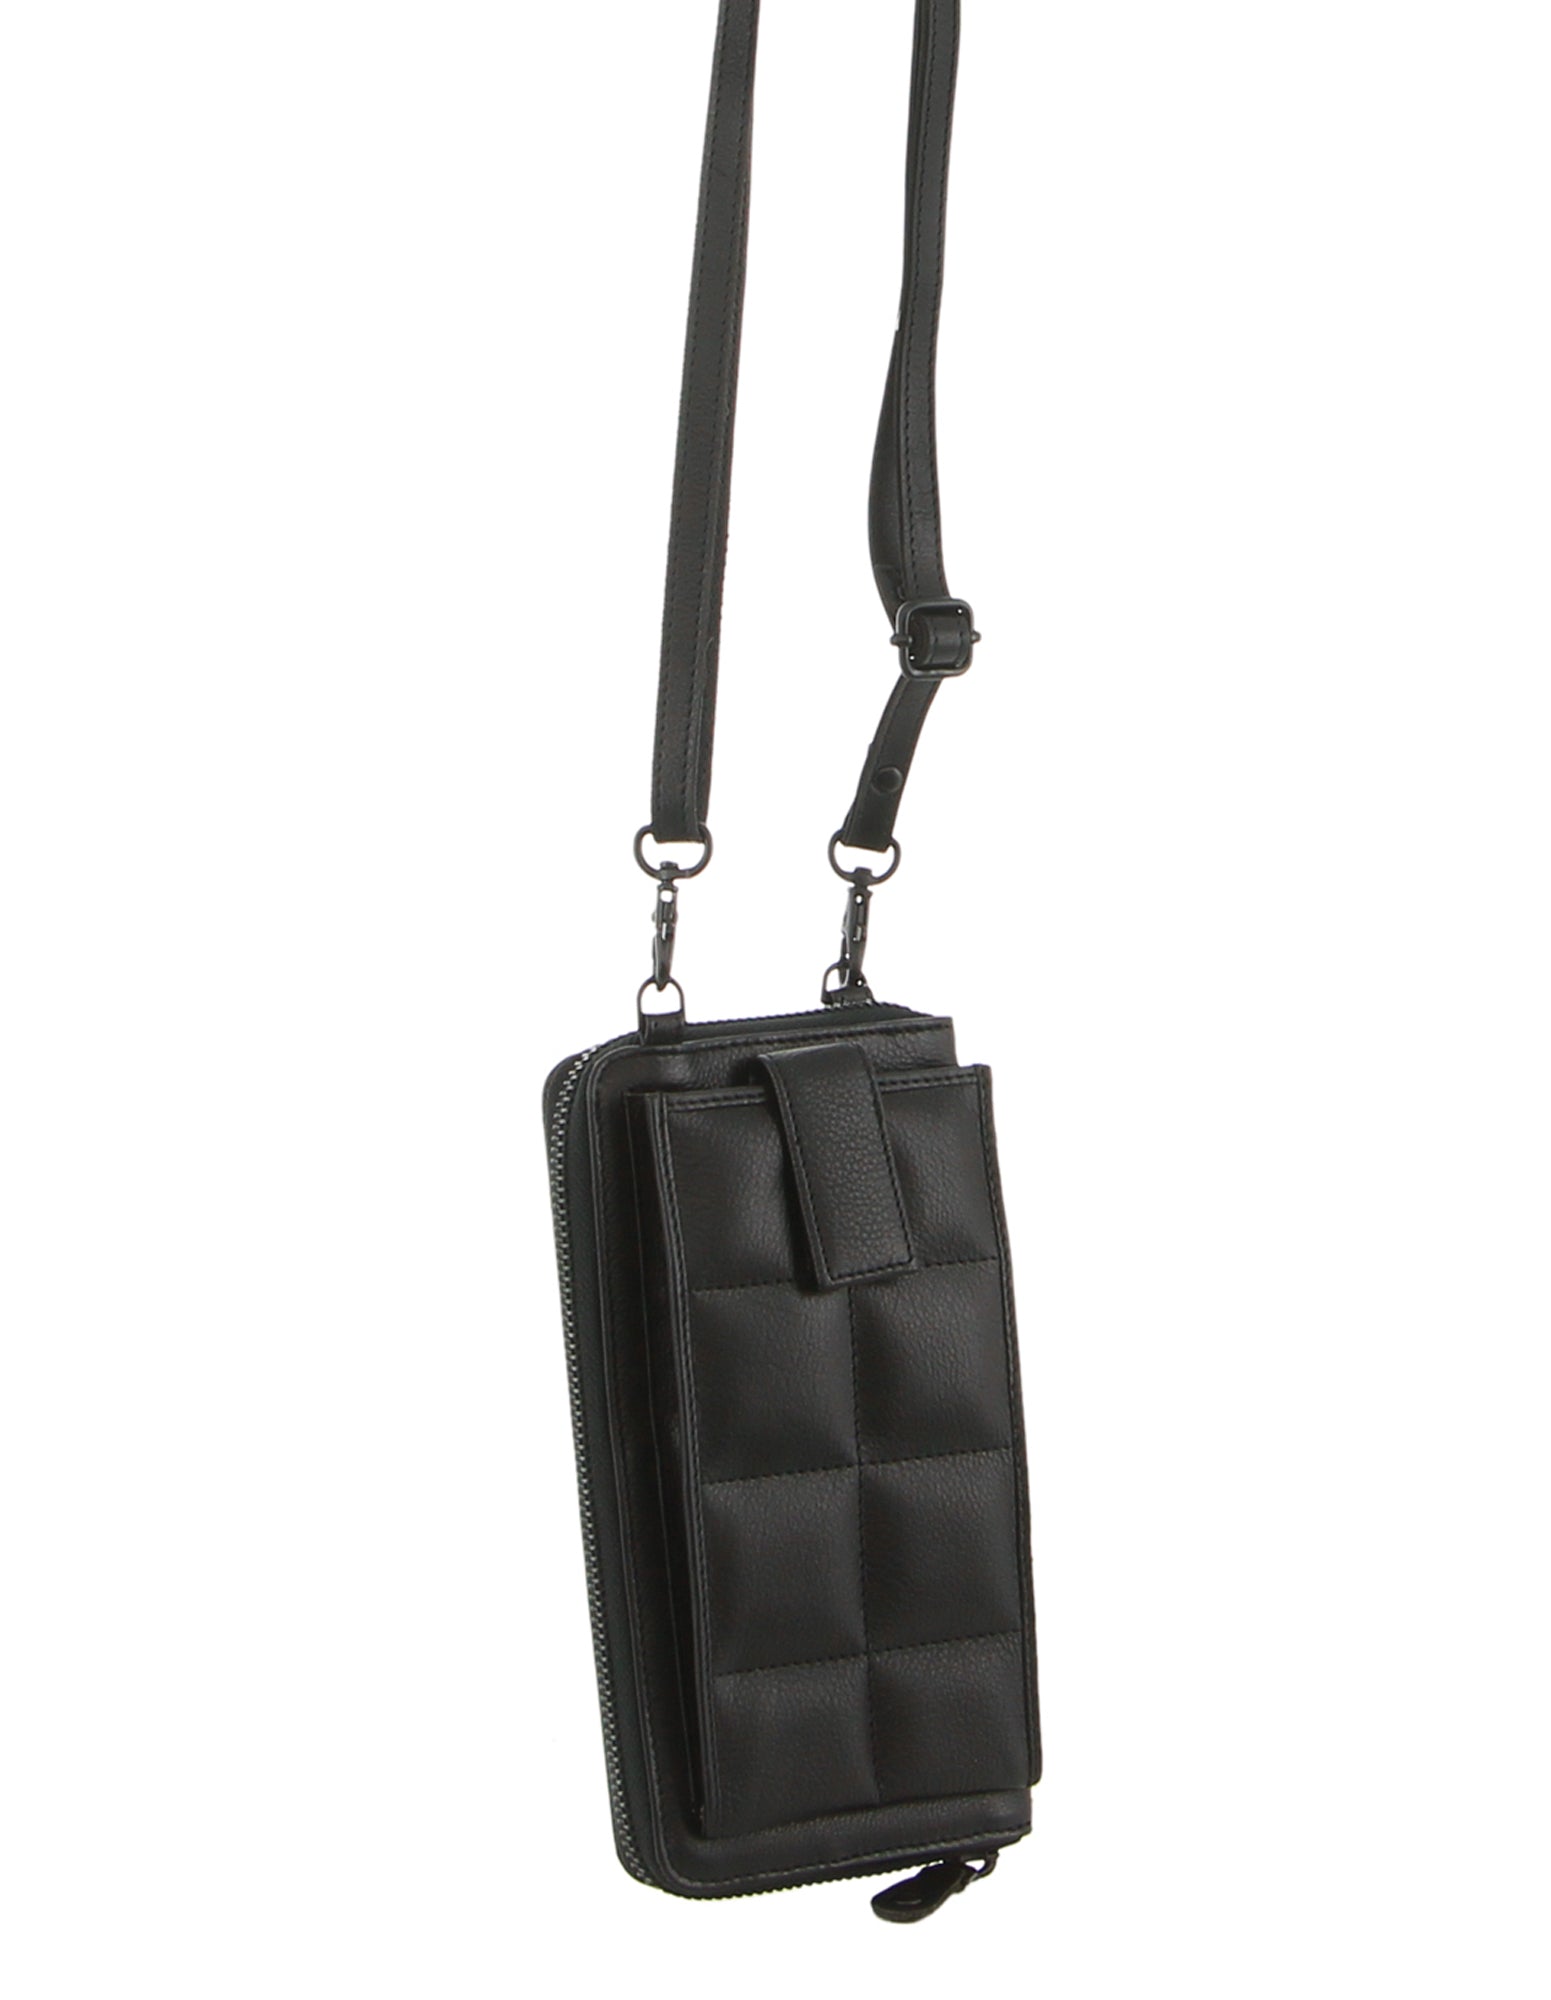 Pierre Cardin Quilted Leather Ladies Phone/Wallet Bag in Black